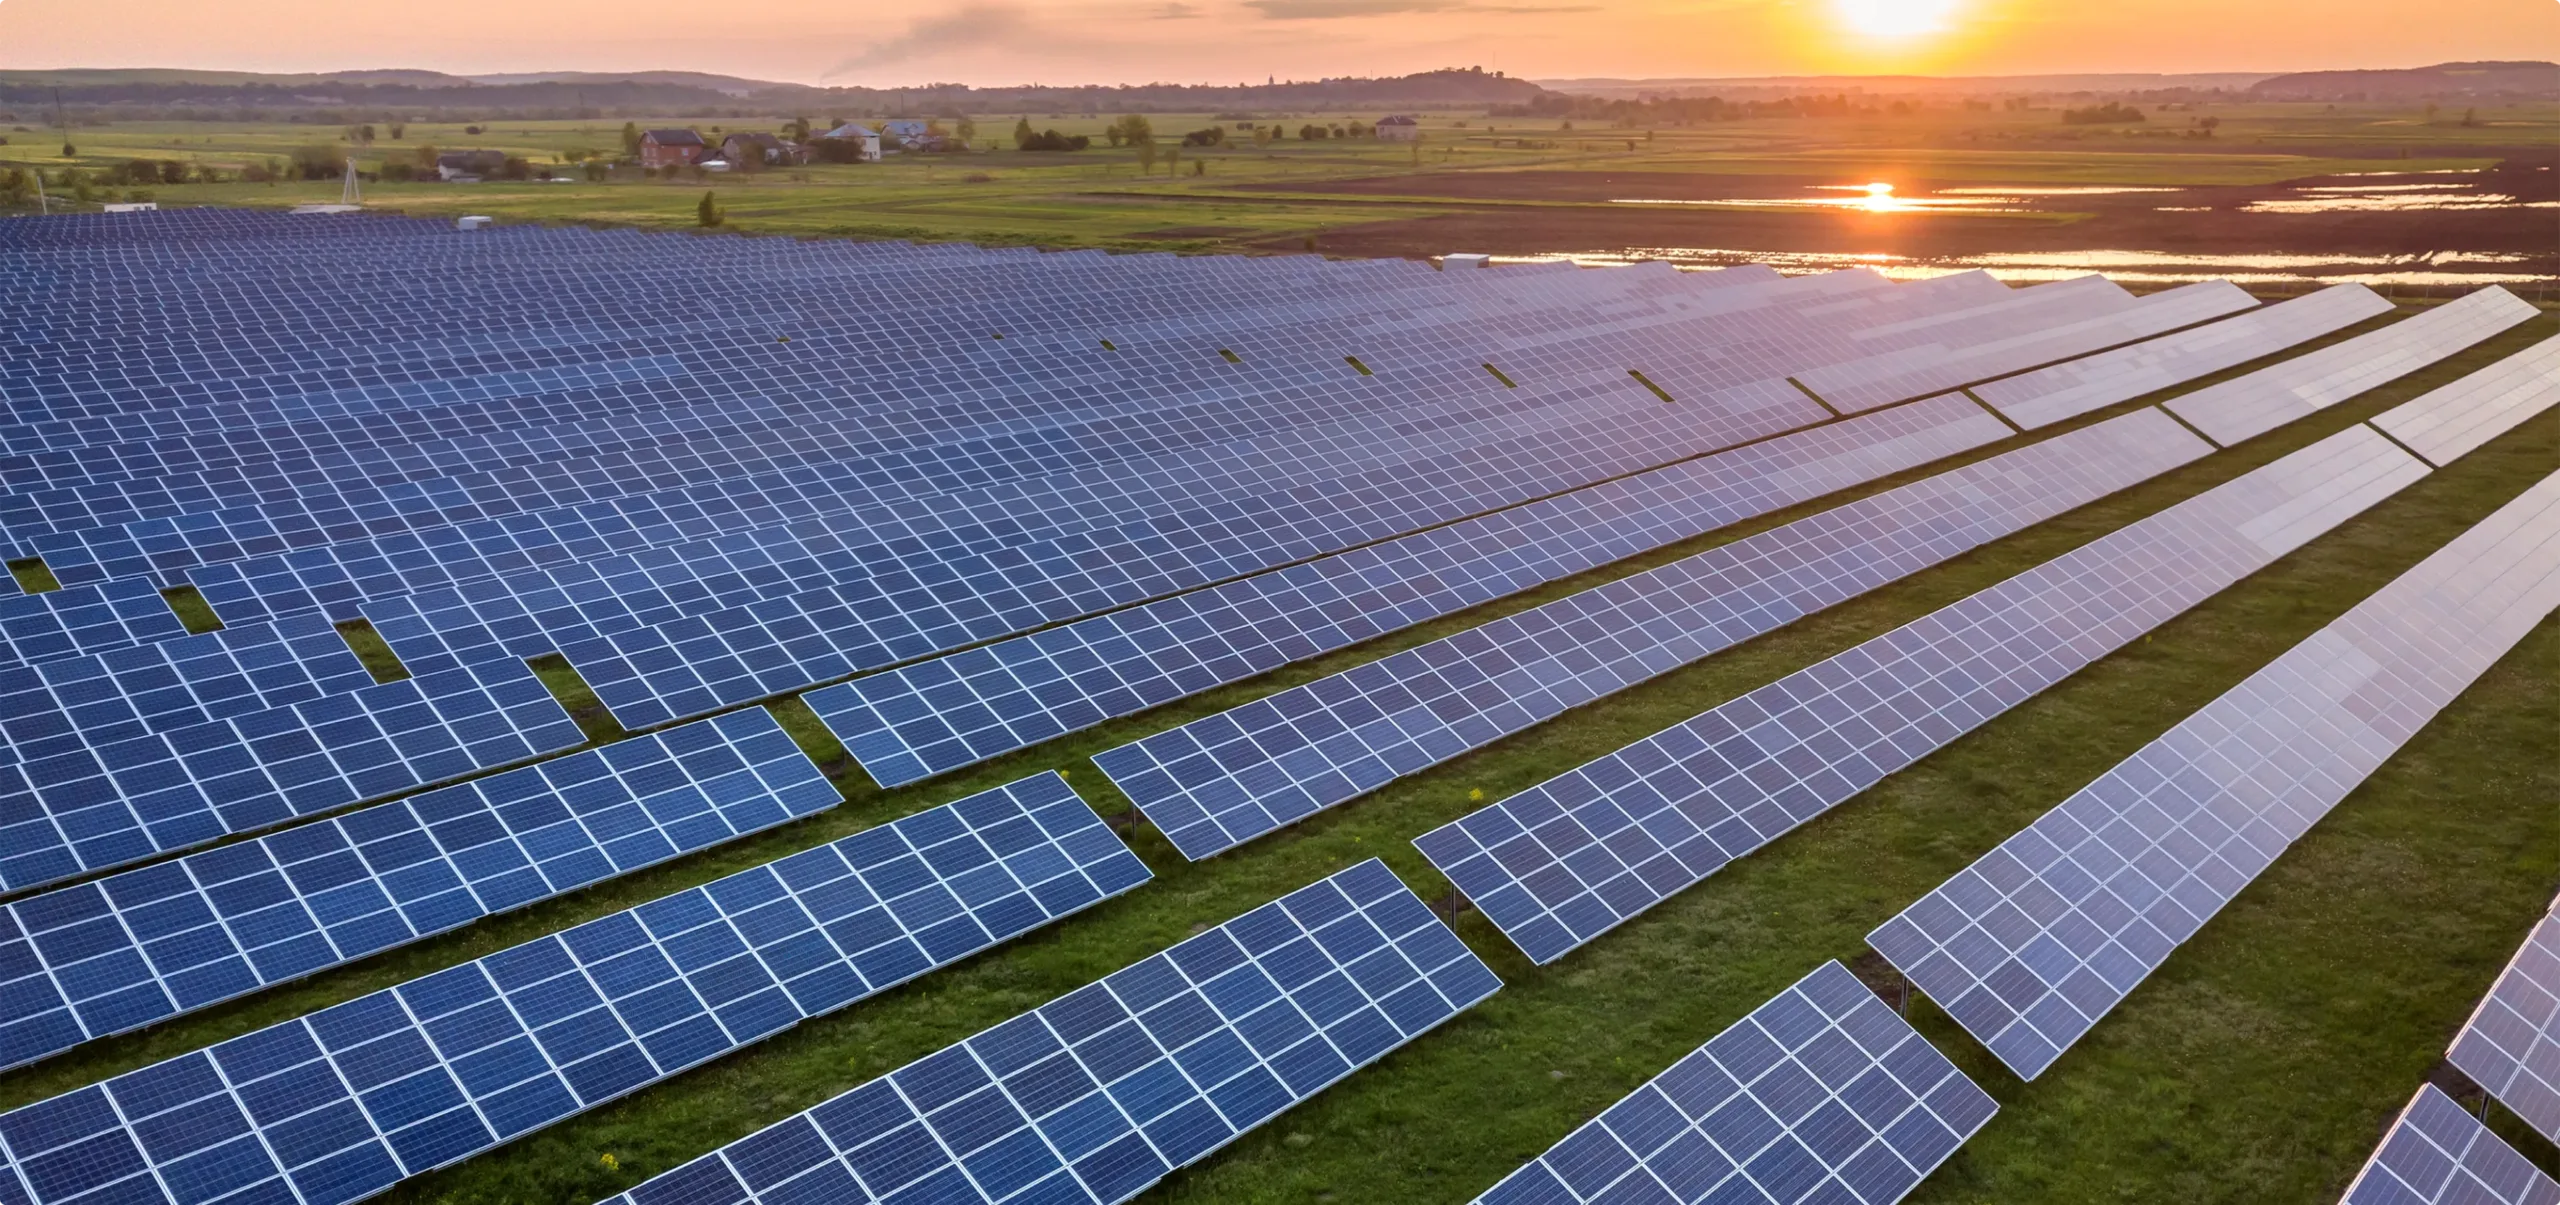 Vast solar panels at sunset, renewable energy landscape.